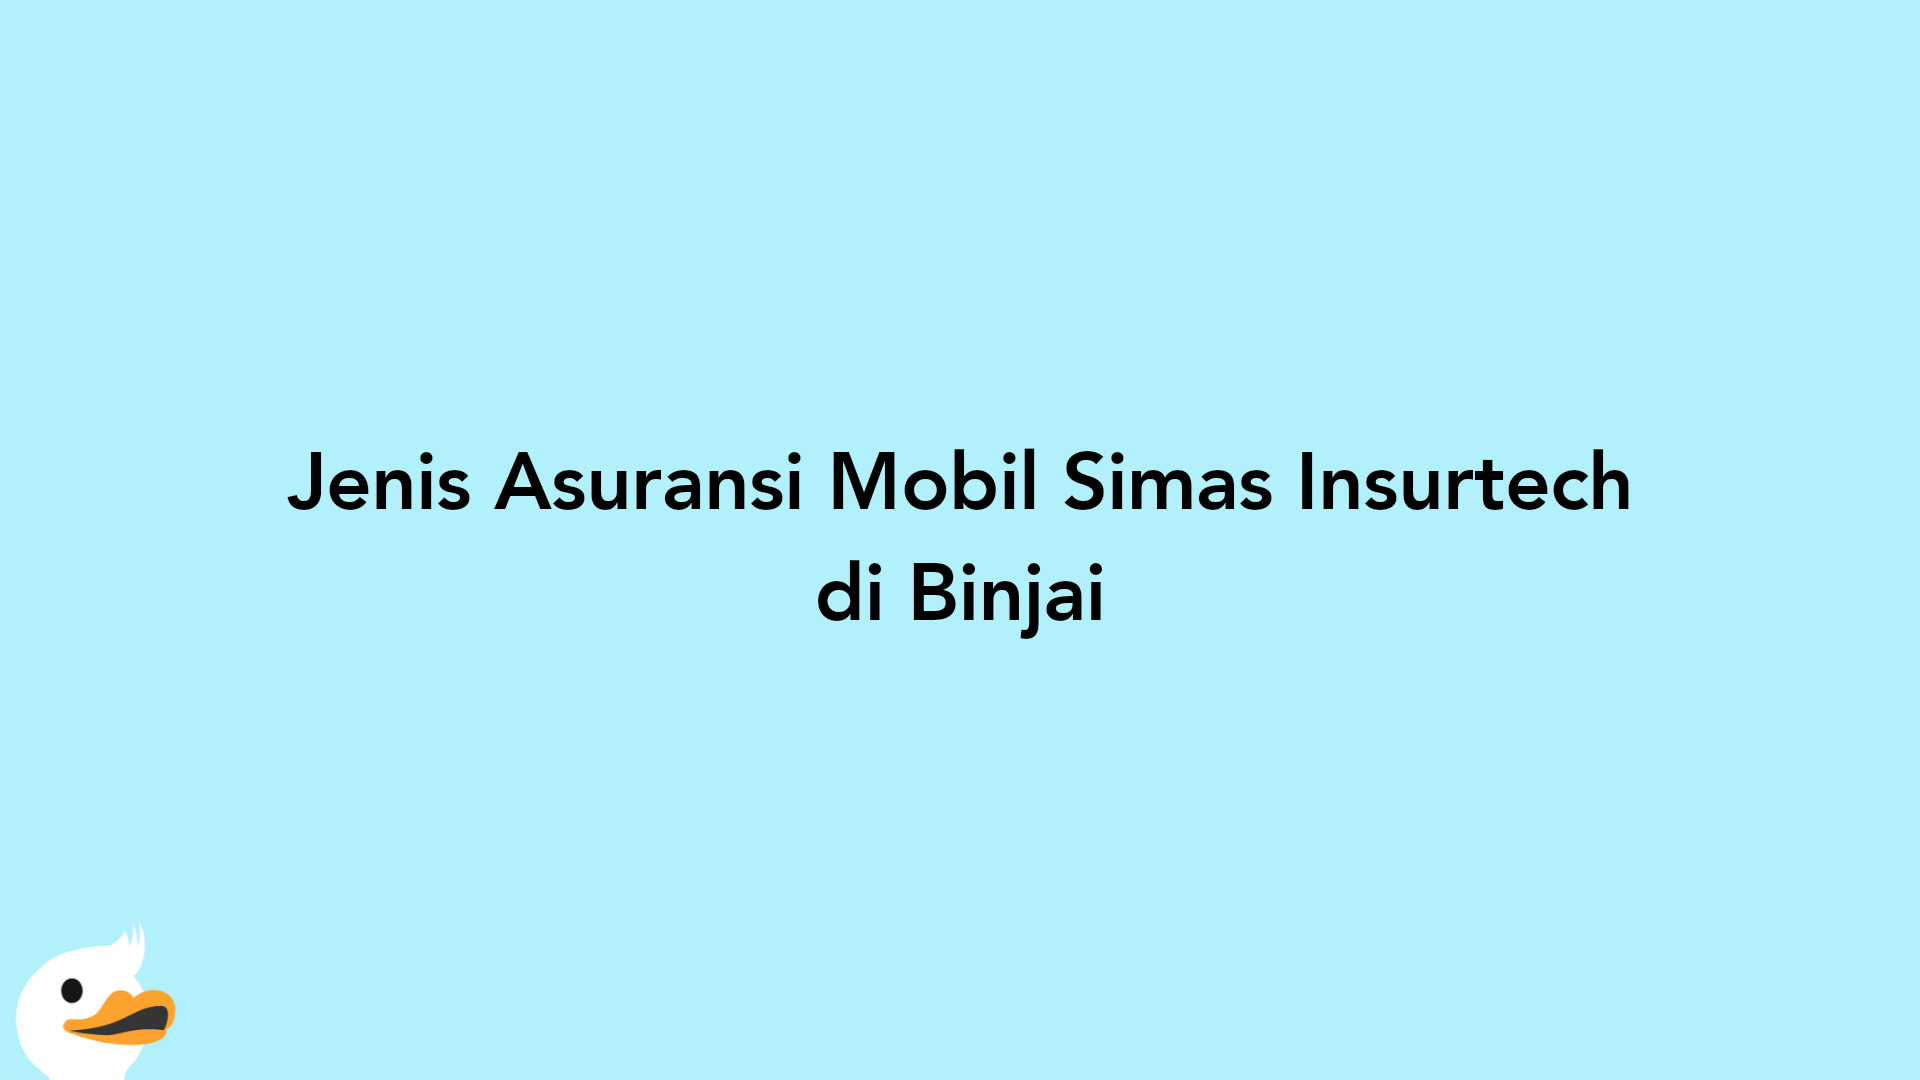 Jenis Asuransi Mobil Simas Insurtech di Binjai